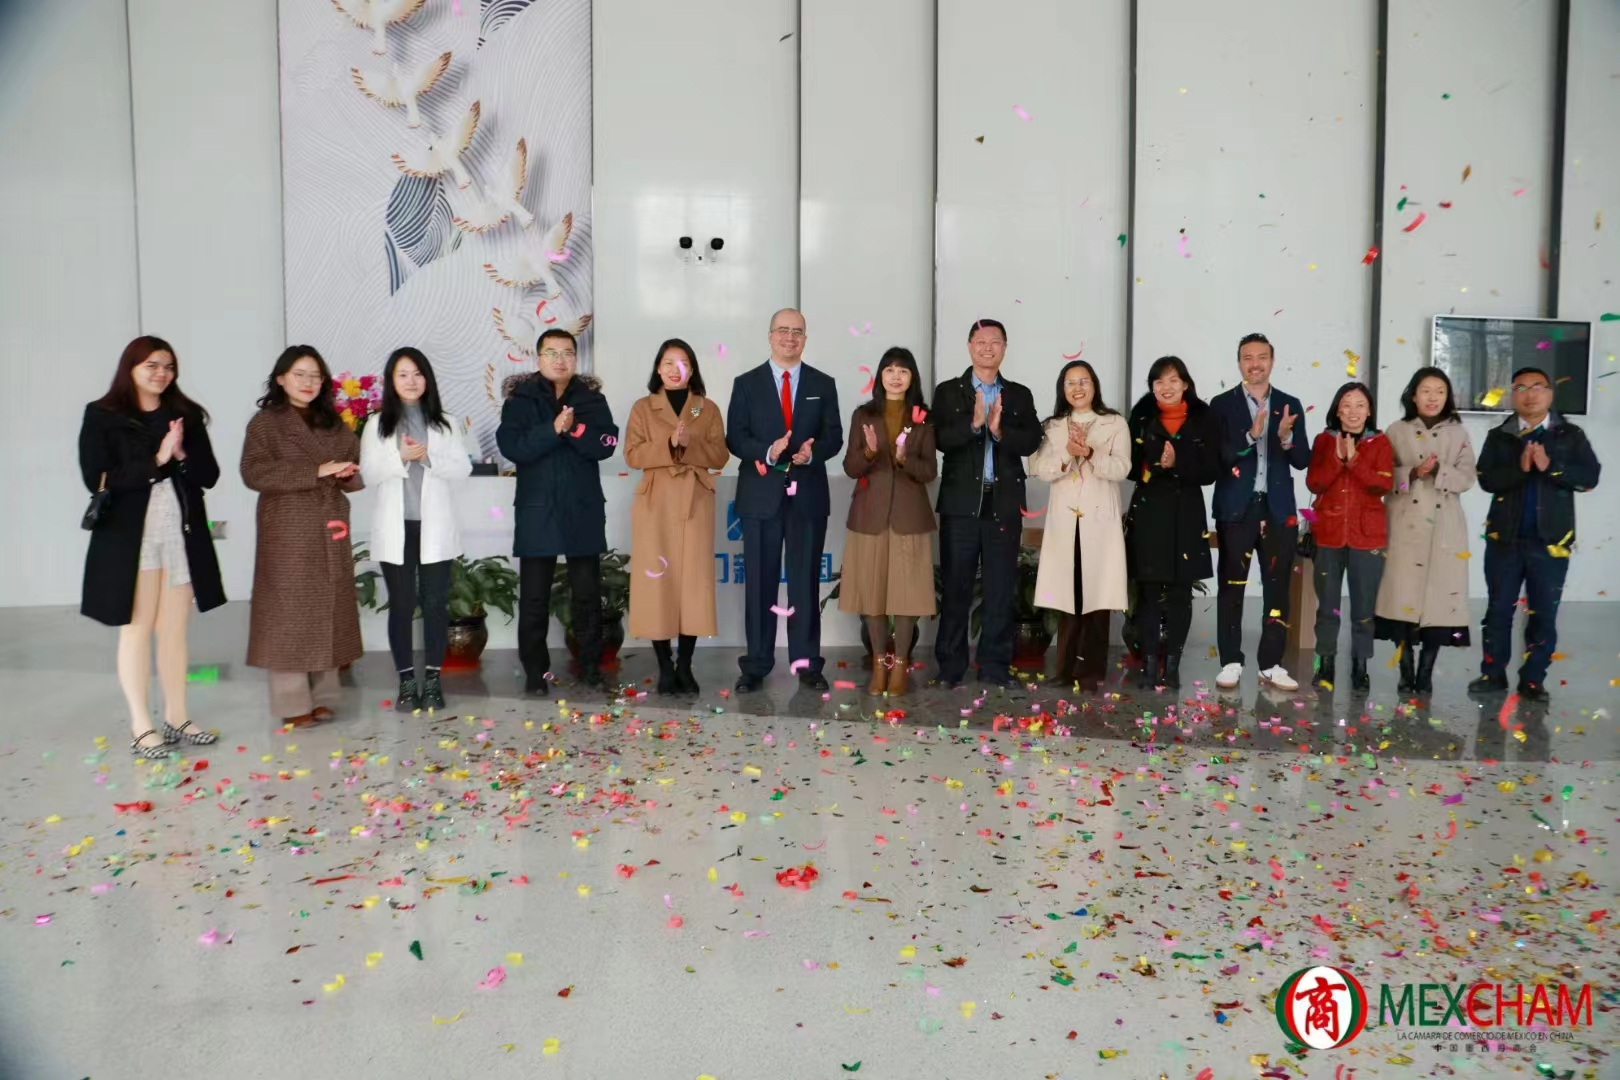 RECAP: A new office of MEXCHAM in Xiamen